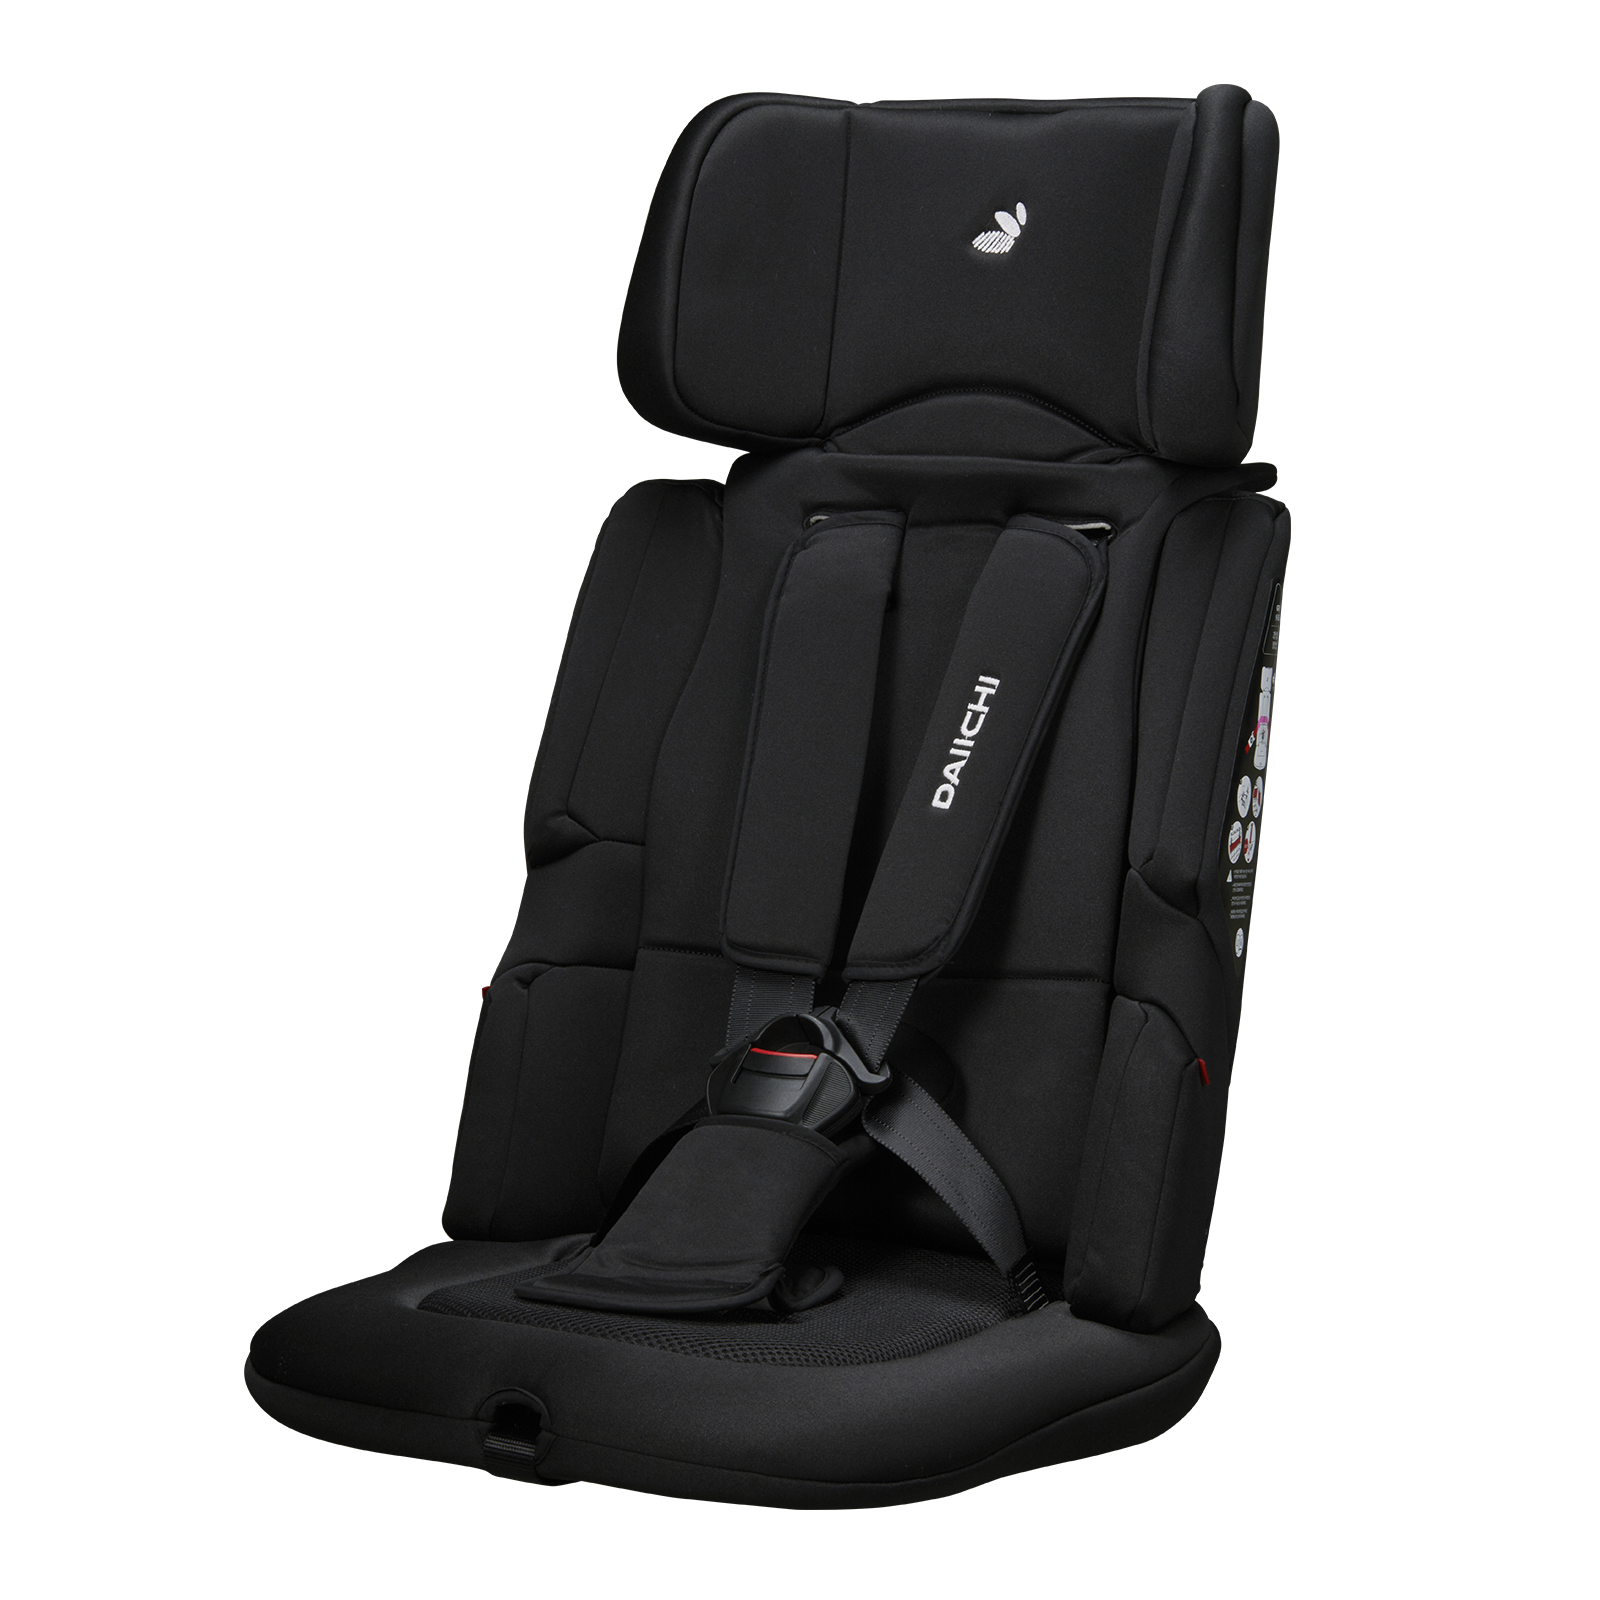 Daiichi Easy Carry 2 Portable Car Seat - Black  [Pre-order ETA early July 2024]